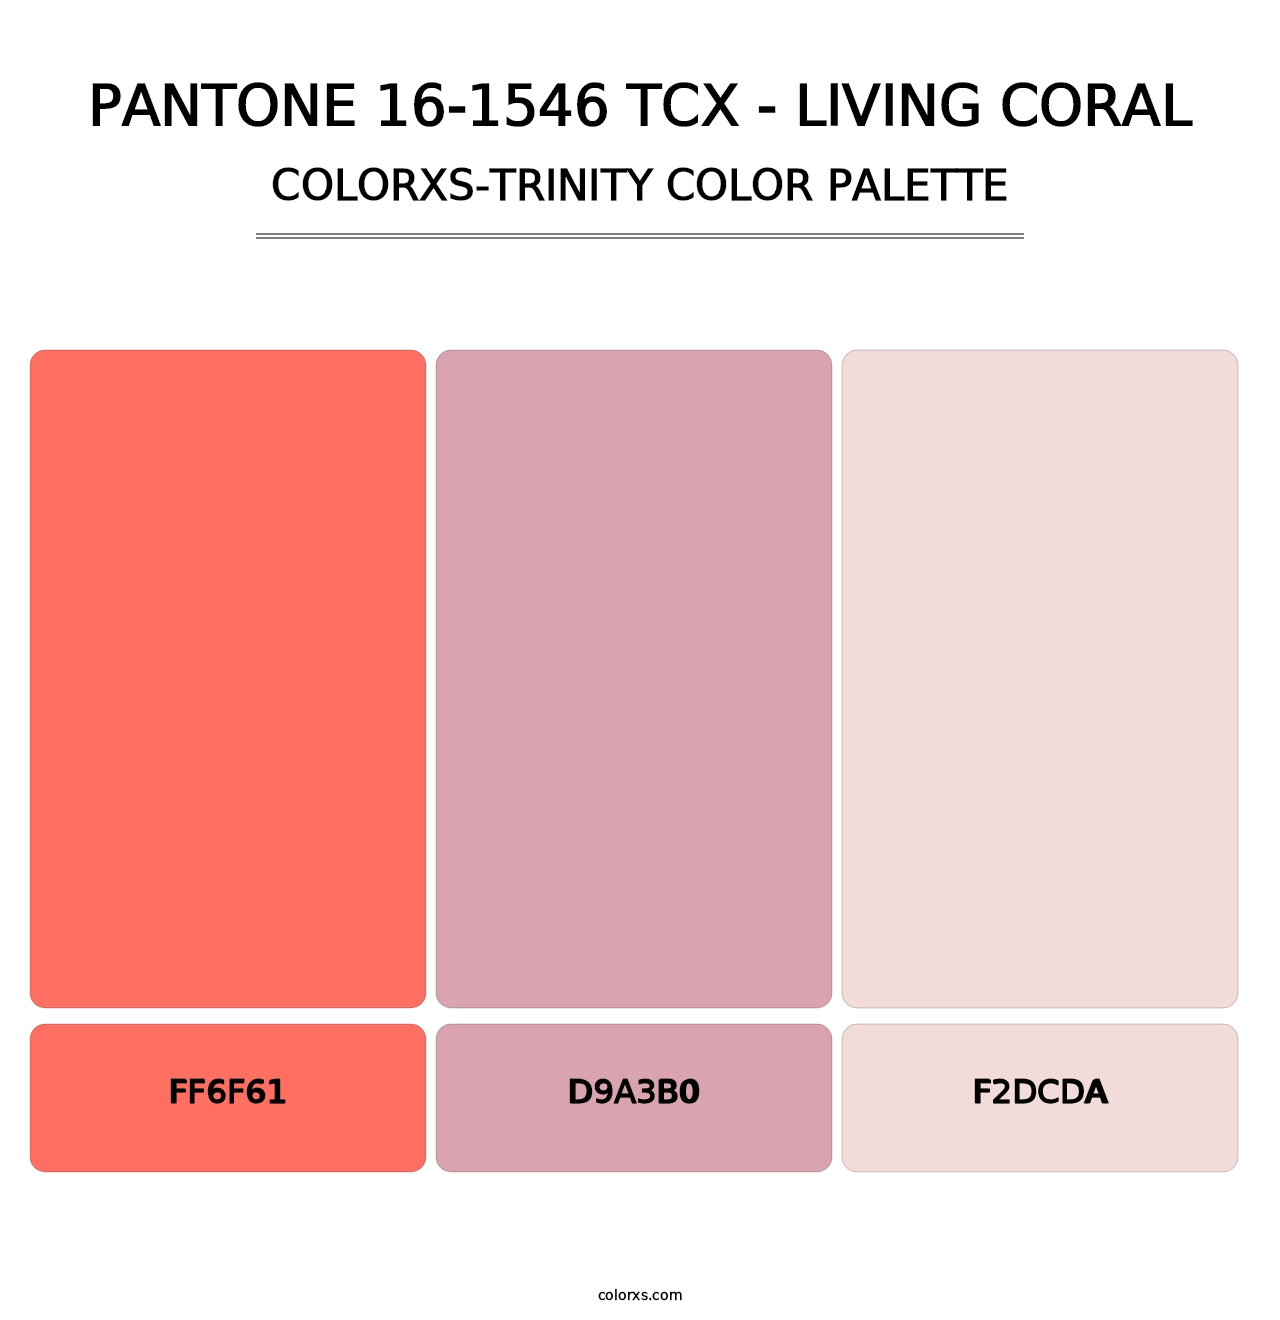 PANTONE 16-1546 TCX - Living Coral - Colorxs Trinity Palette